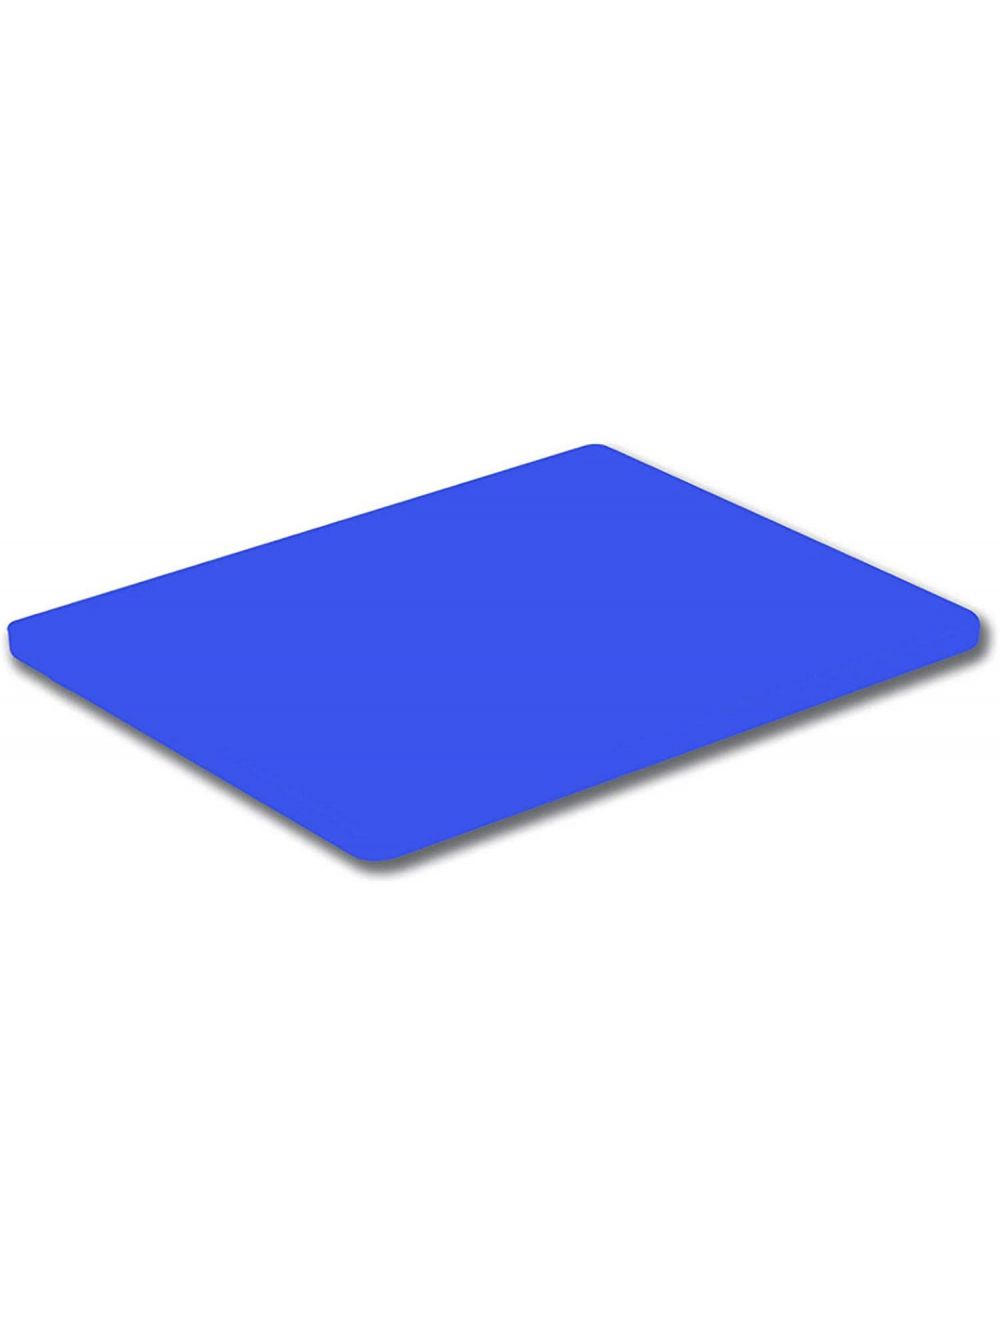 Raj Cutting Board, Blue, H 40.0 x W 60.0 x D 2.0 cm